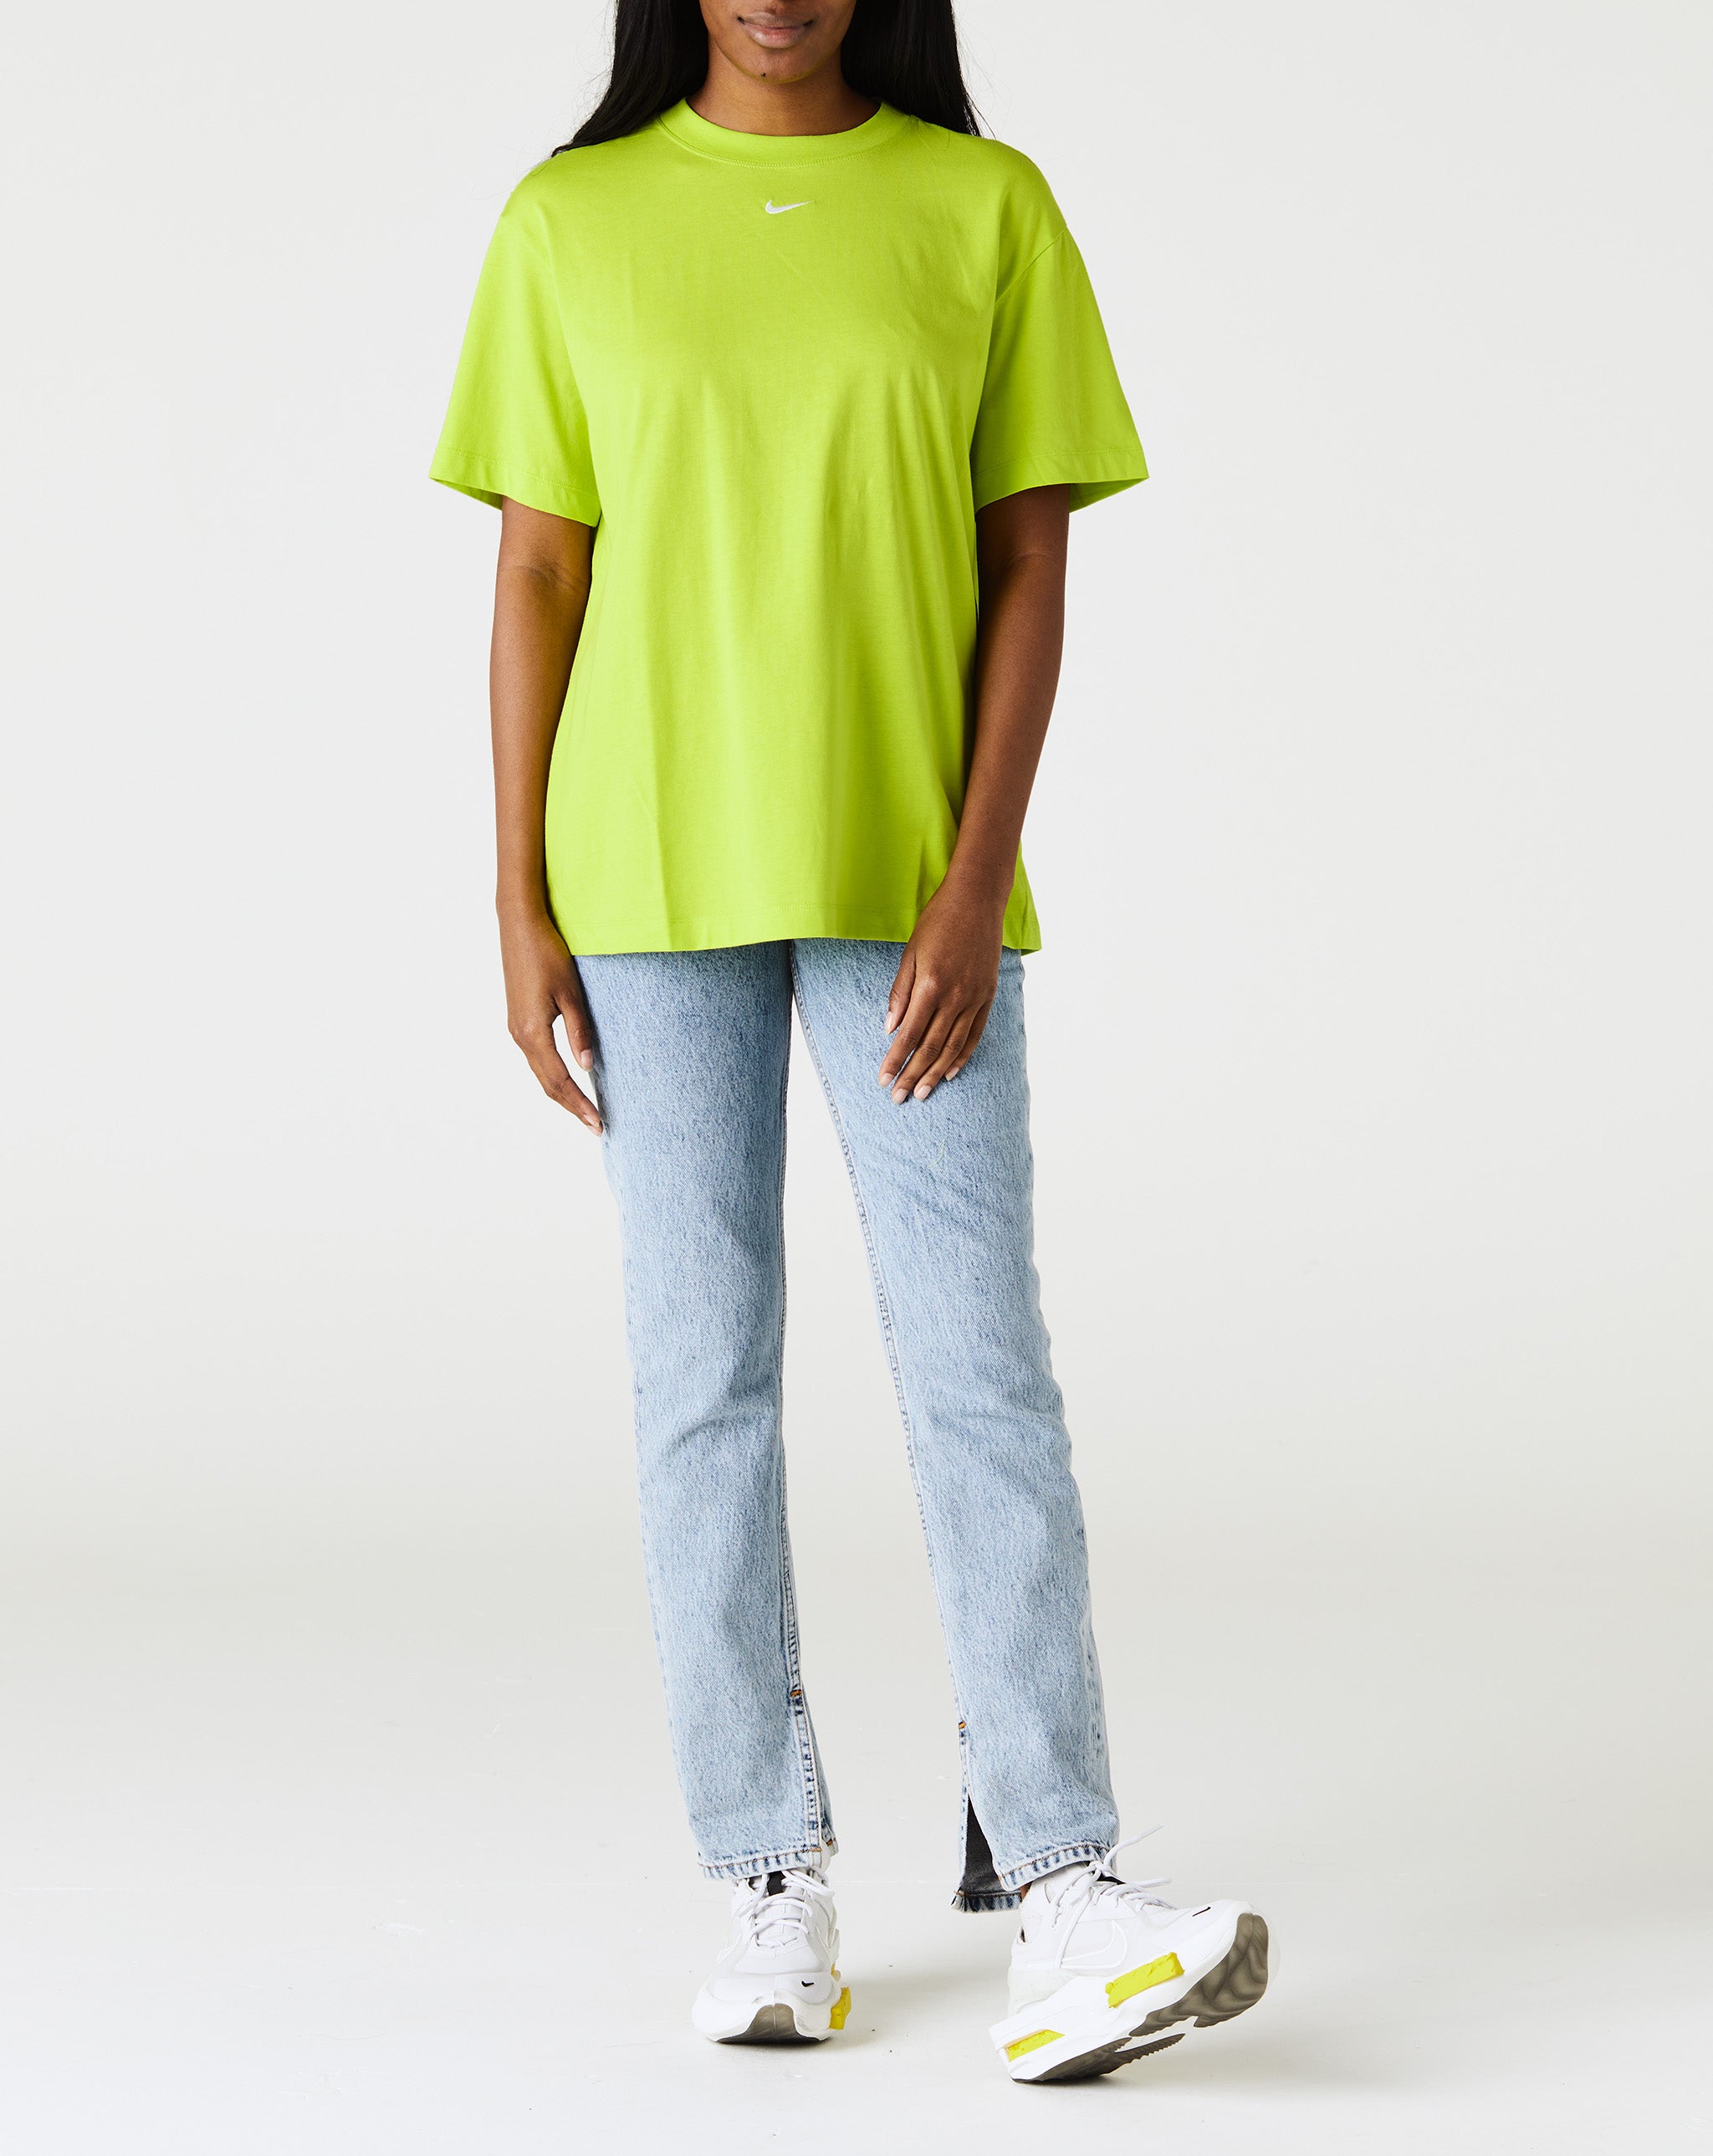 Nike Topman T-shirt avec imprimé London Noir  - Cheap Urlfreeze Jordan outlet